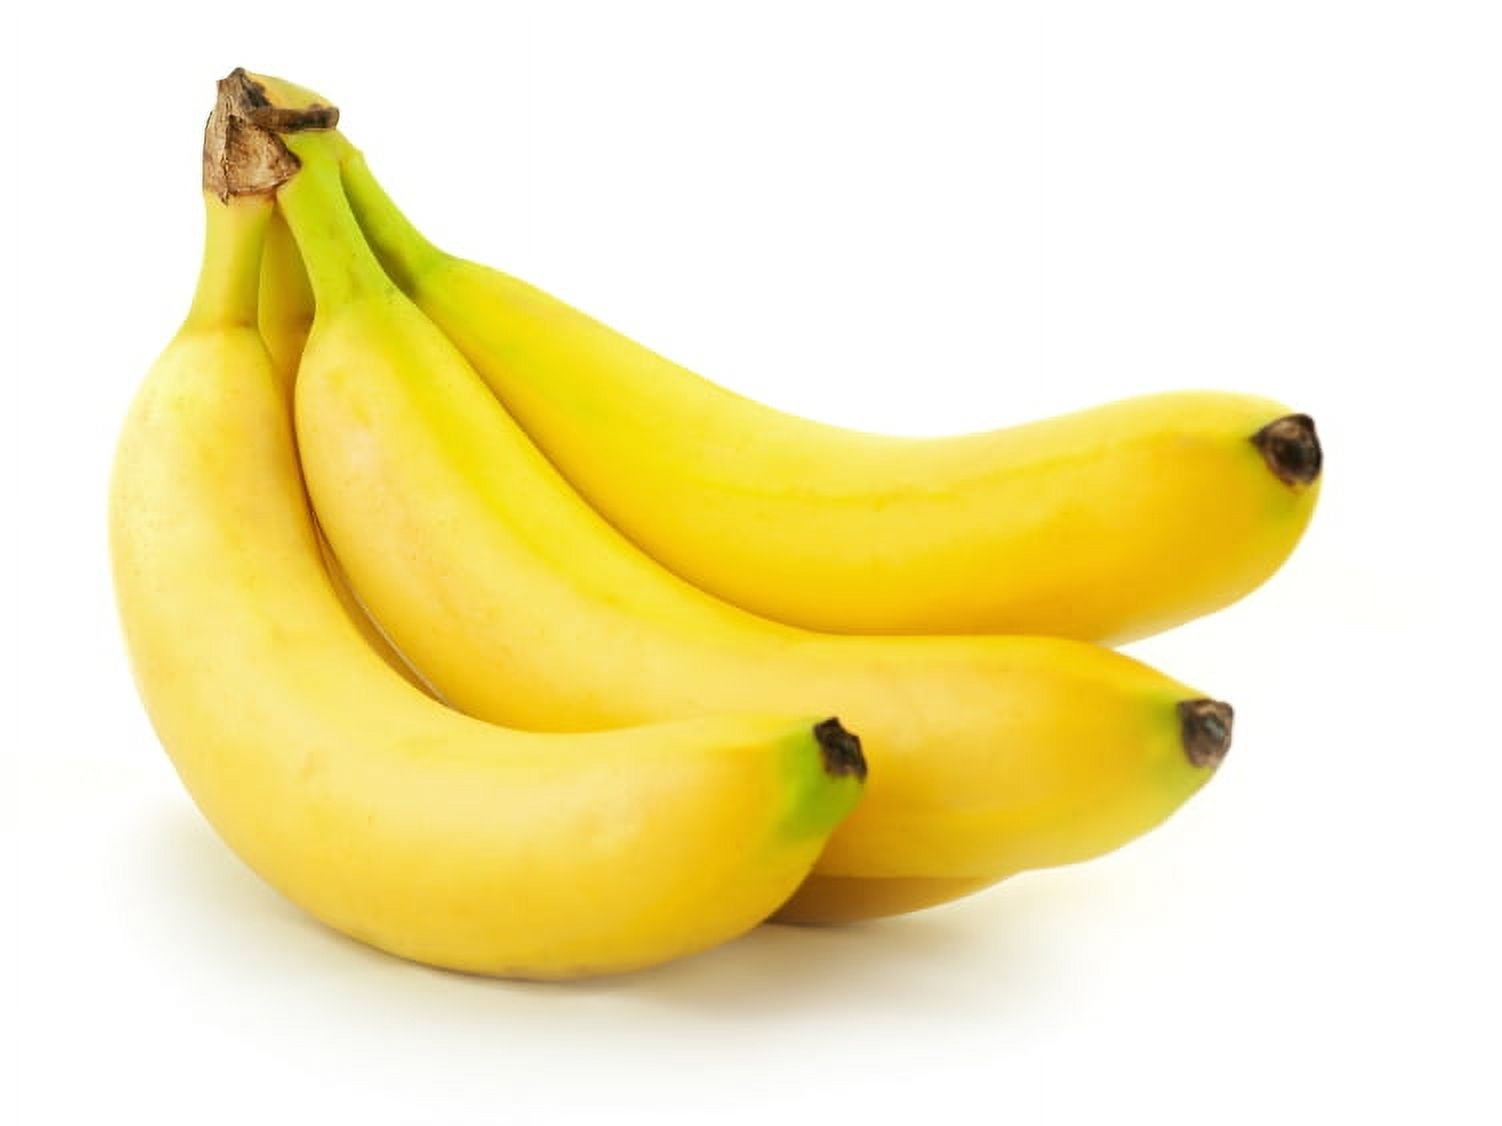 Evaxo Fresh Fruits Banana 3 lb bunch .#B